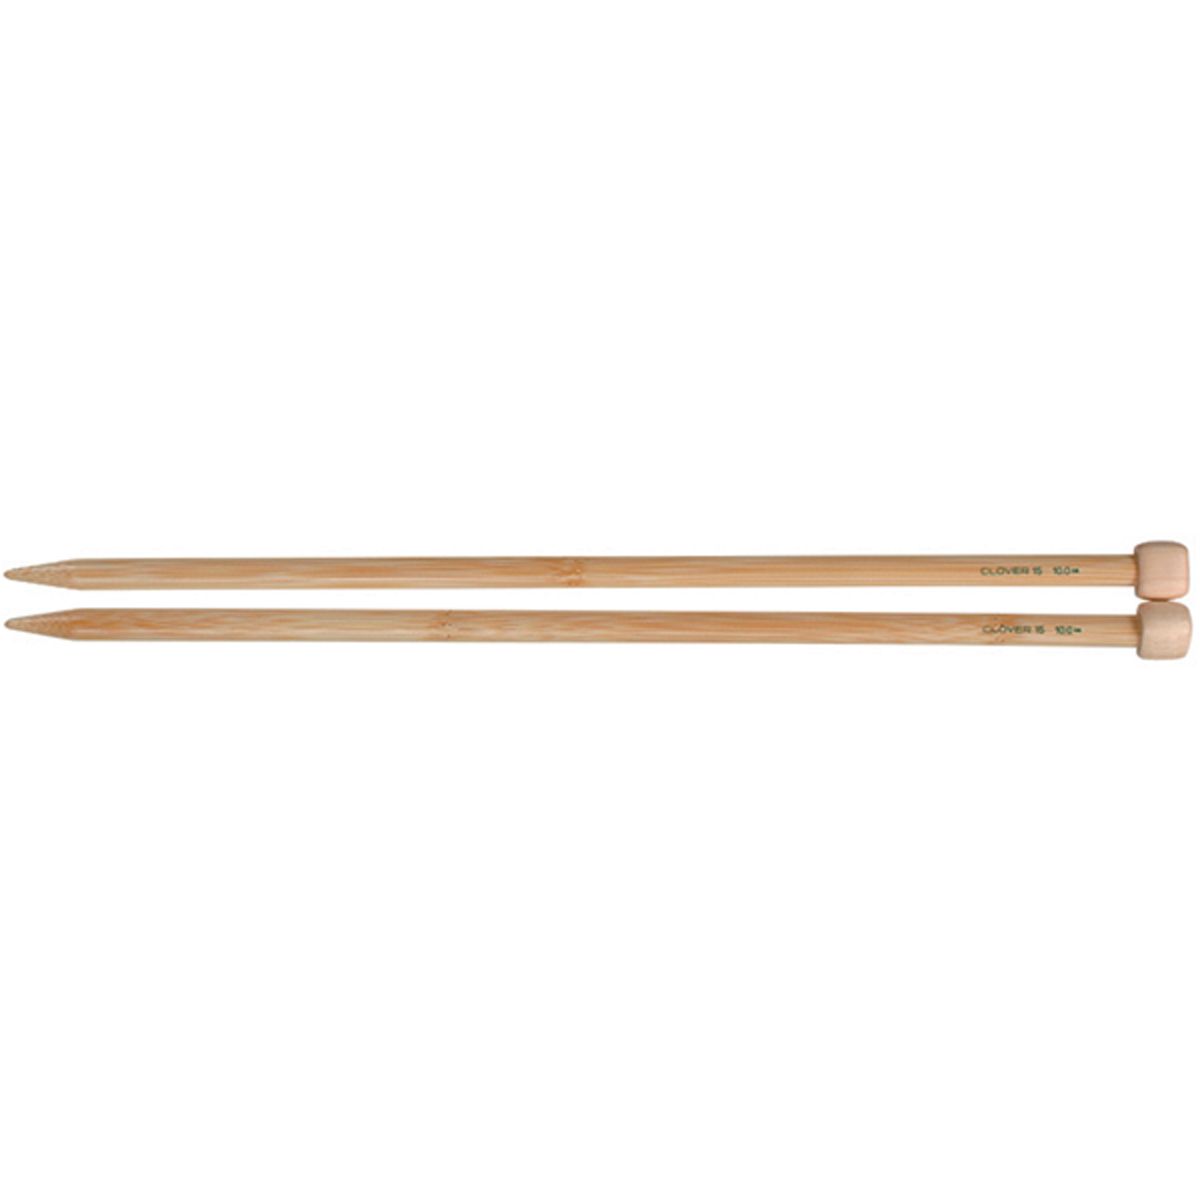 Clover Bamboo Single Point Knitting Needles 13" 14" Size 1